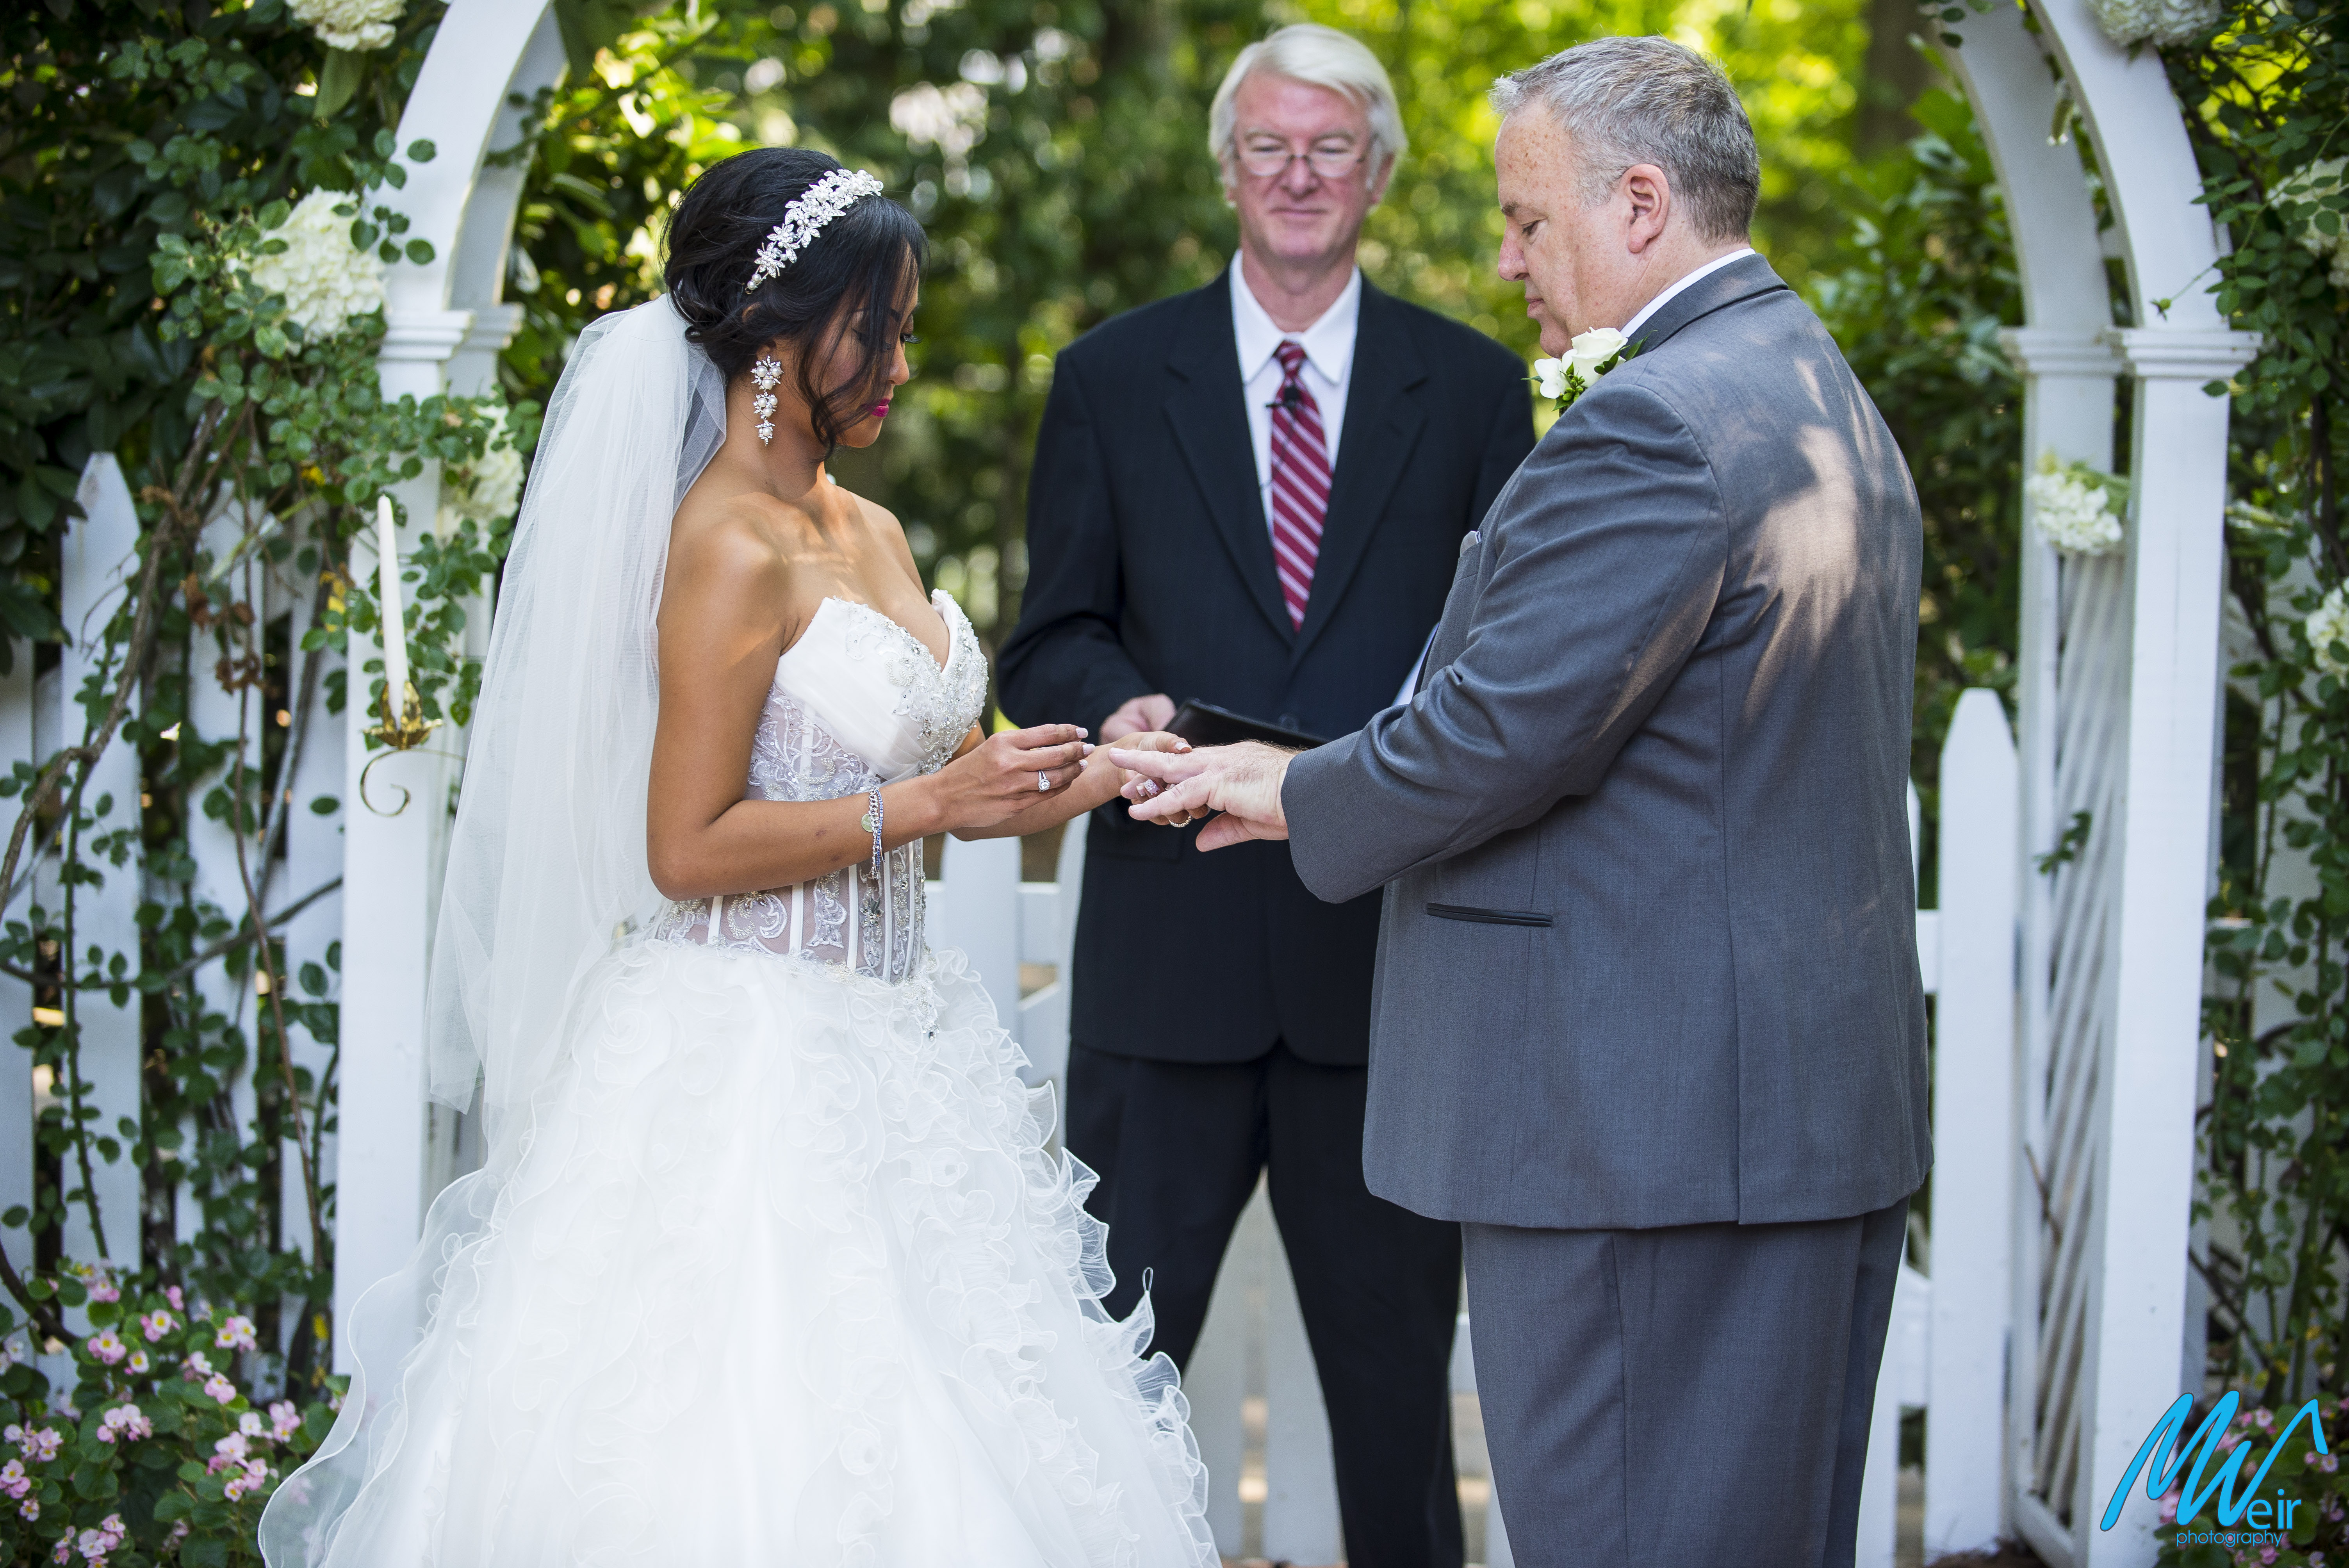 bride puts wedding band on grooms finger